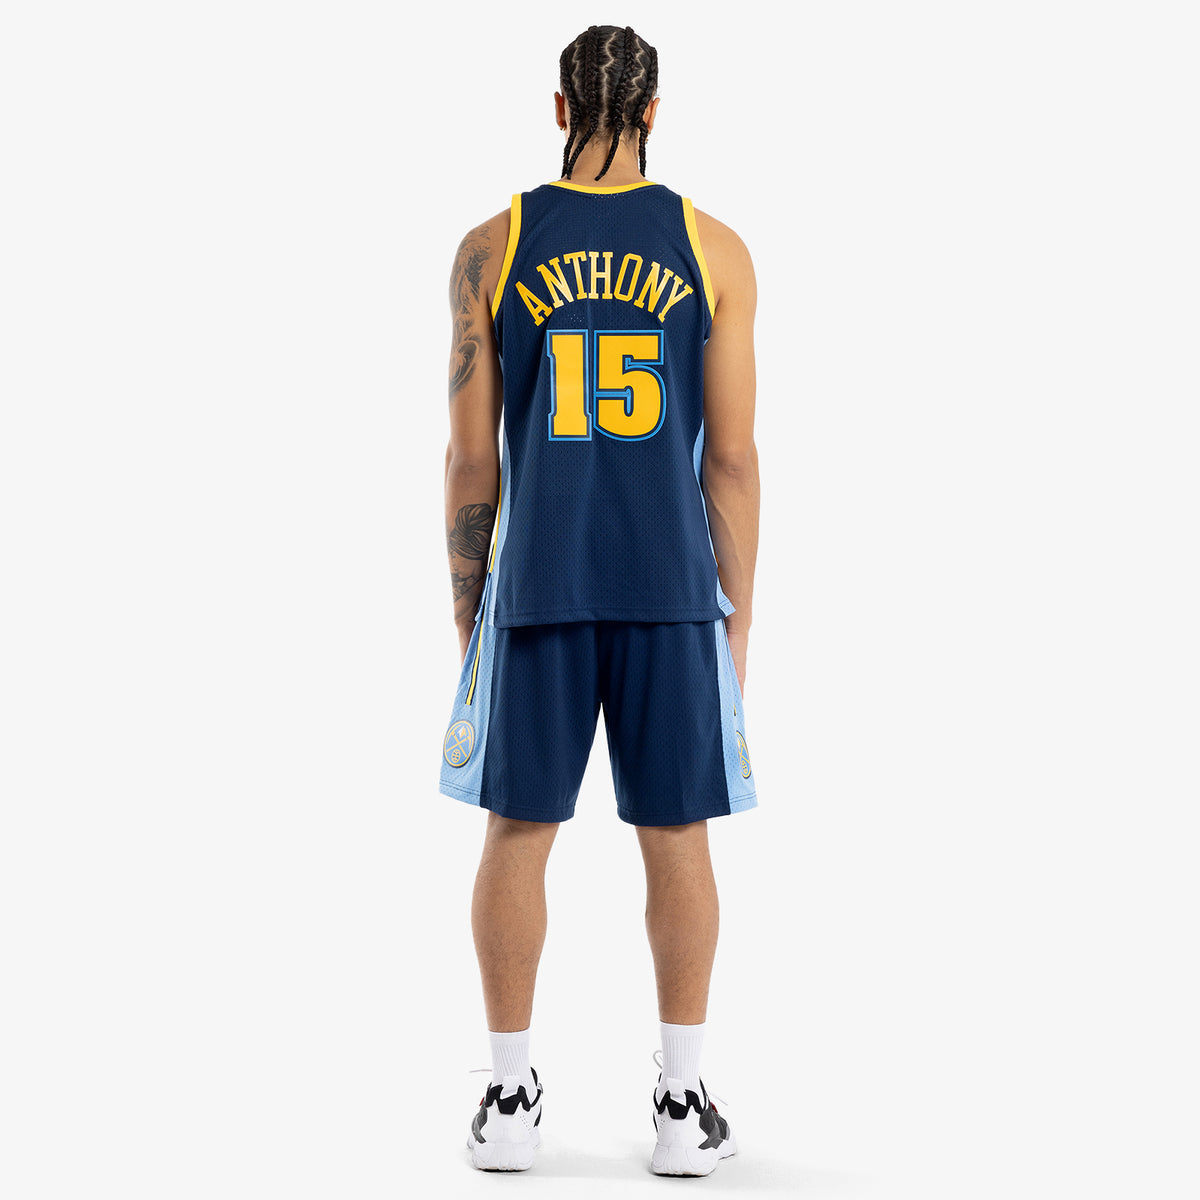 Mitchell & Ness Nba Swingman Jerseys Denver Nuggets Carmelo Anthony 15